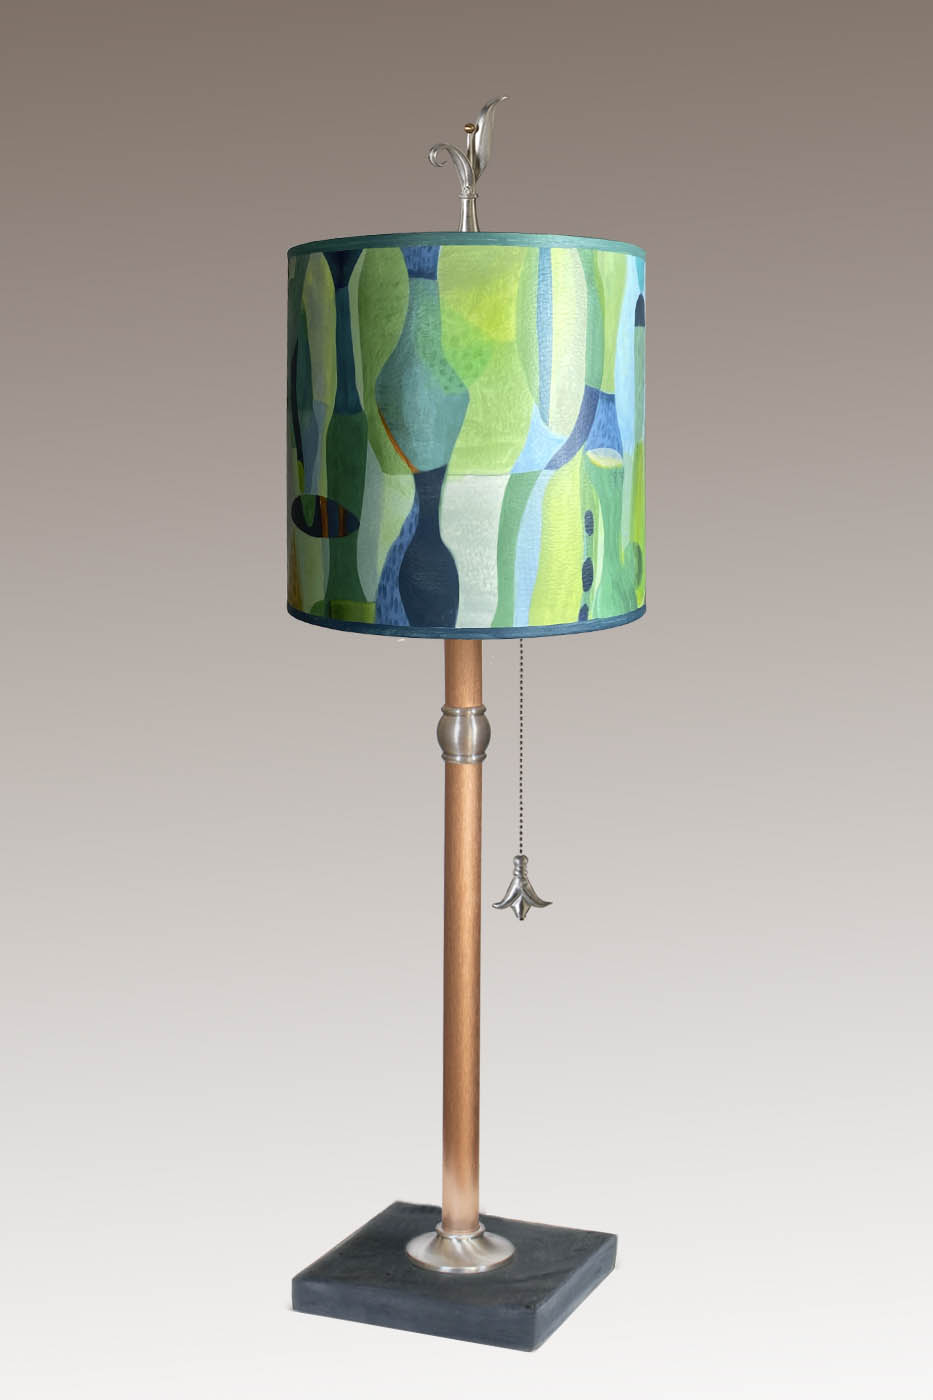 Copper Table Lamp with Medium Drum Shade in Riviera in Citrus